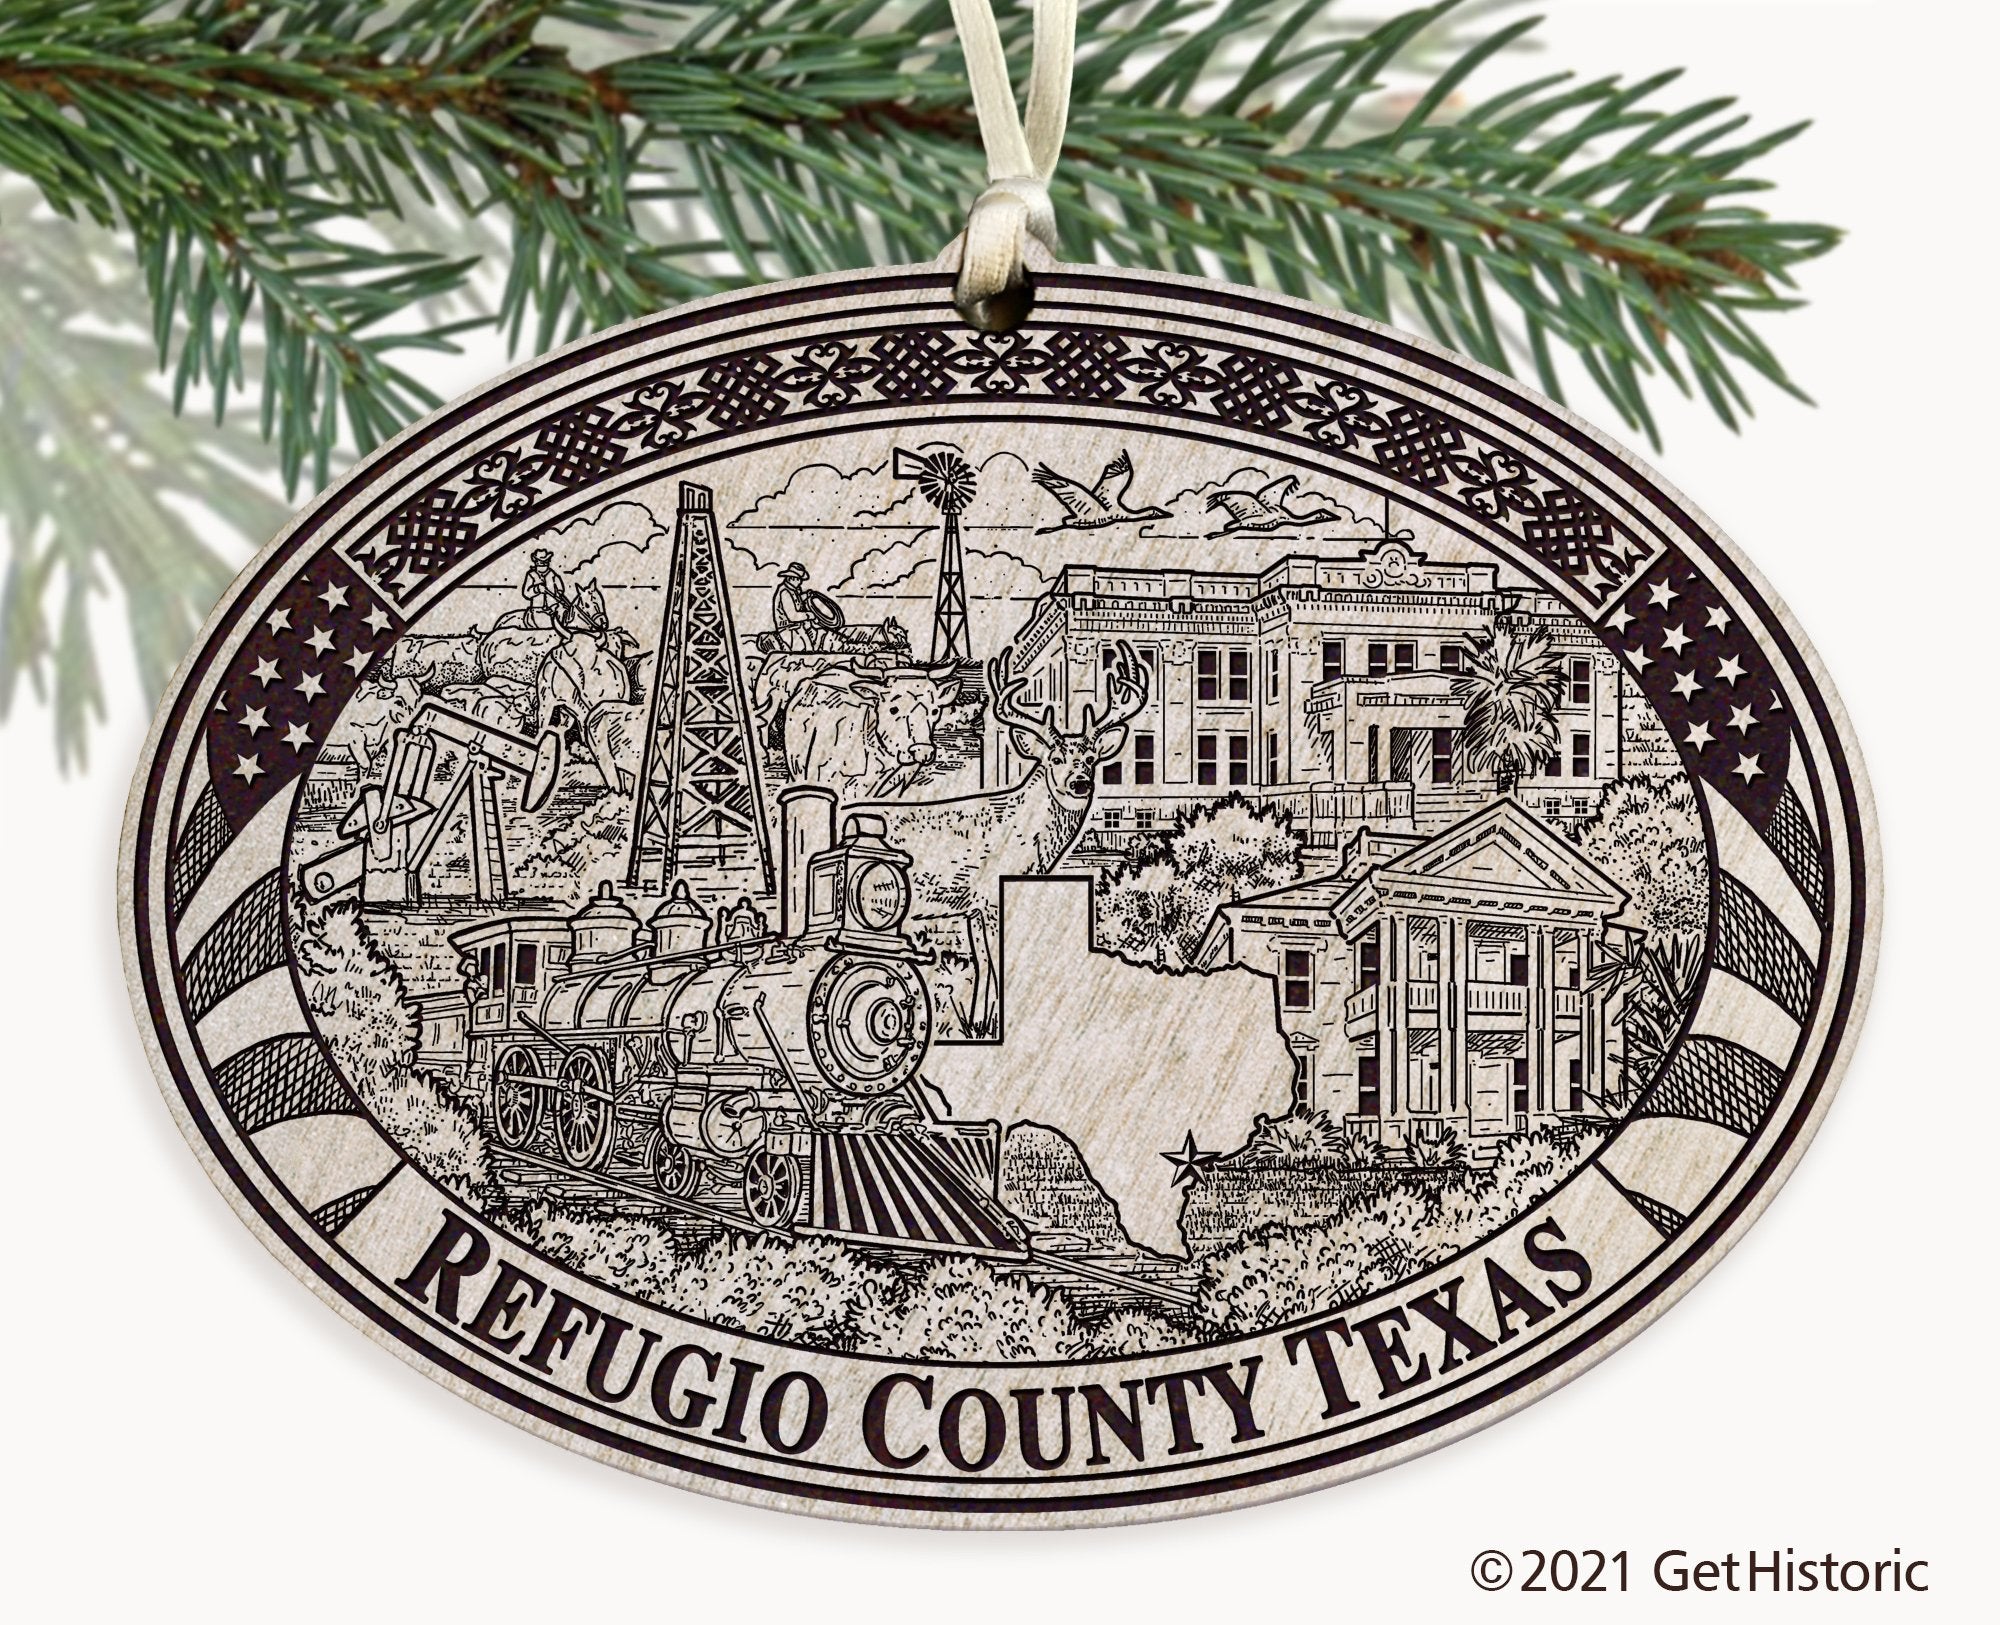 Refugio County Texas Engraved Ornament